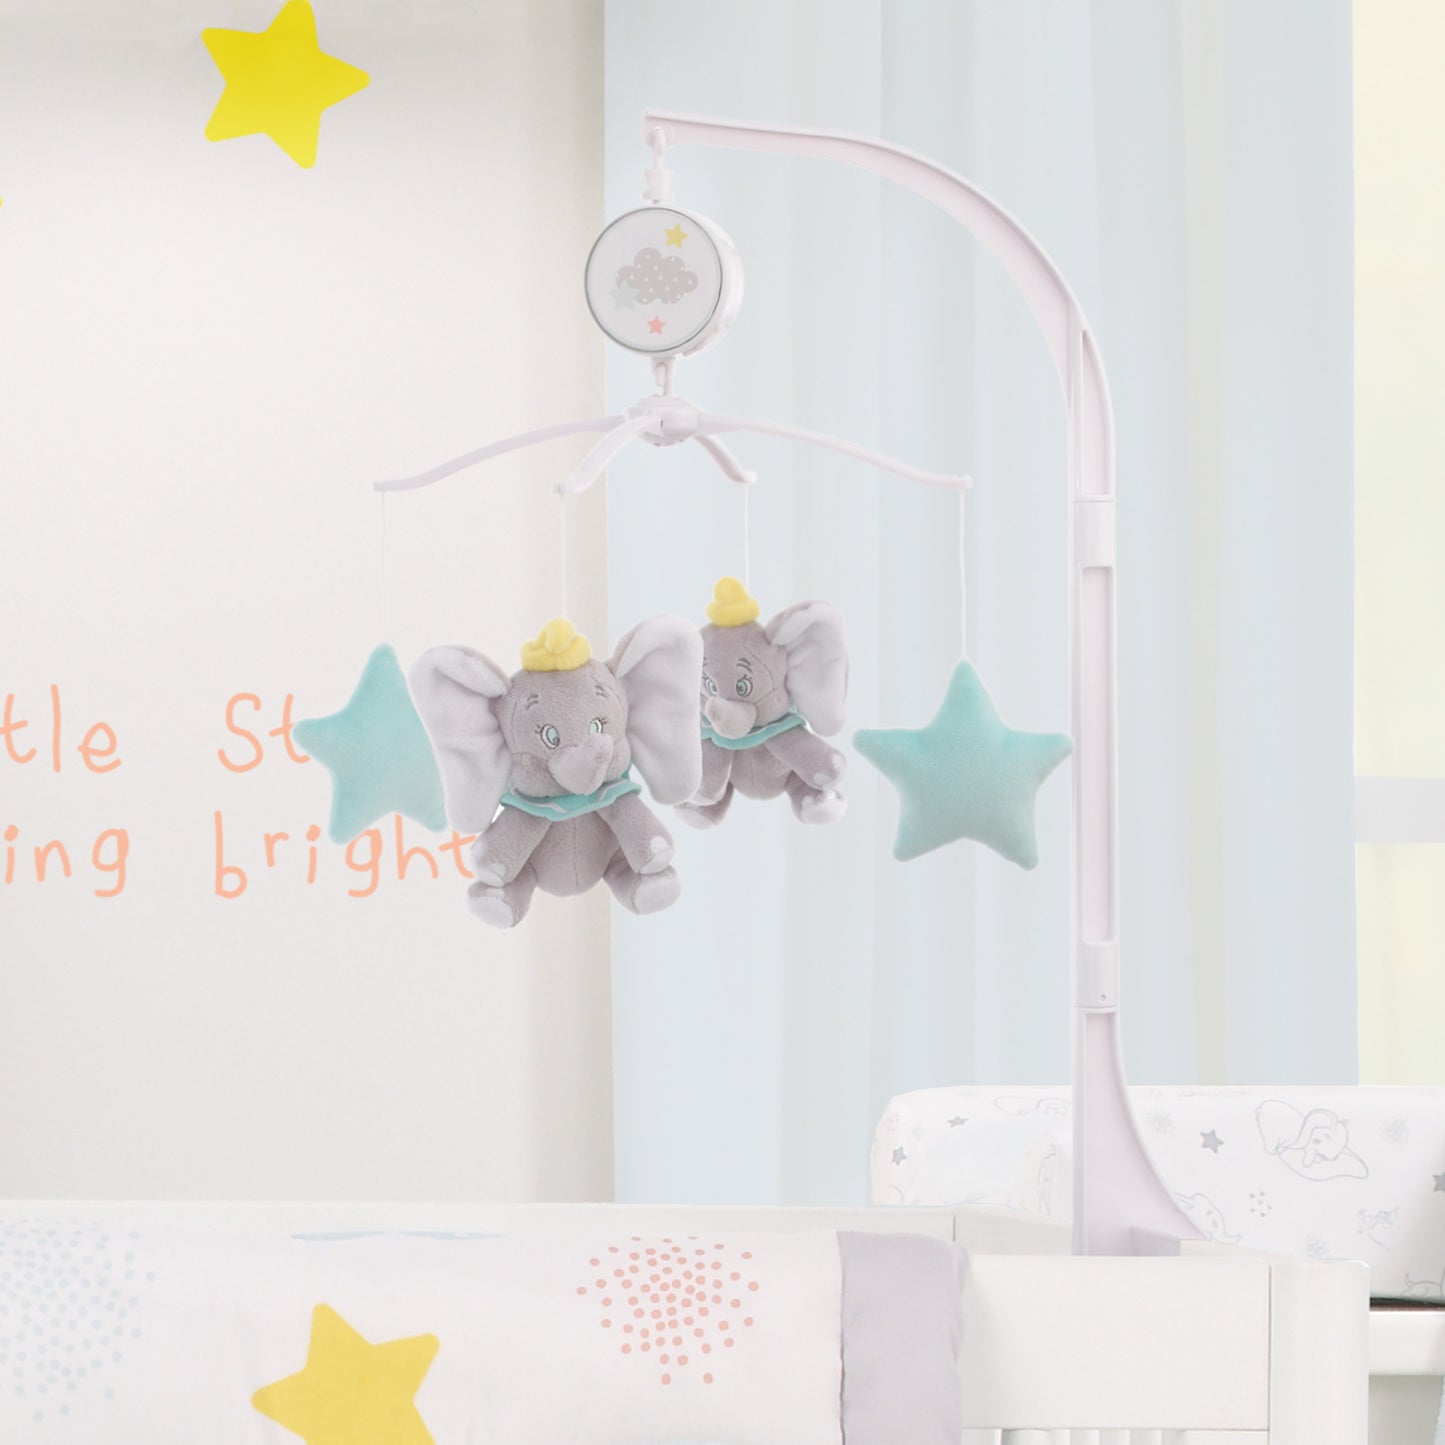 Disney Dumbo - Shine Bright Little Star Aqua, Grey and Yellow Musical Mobile